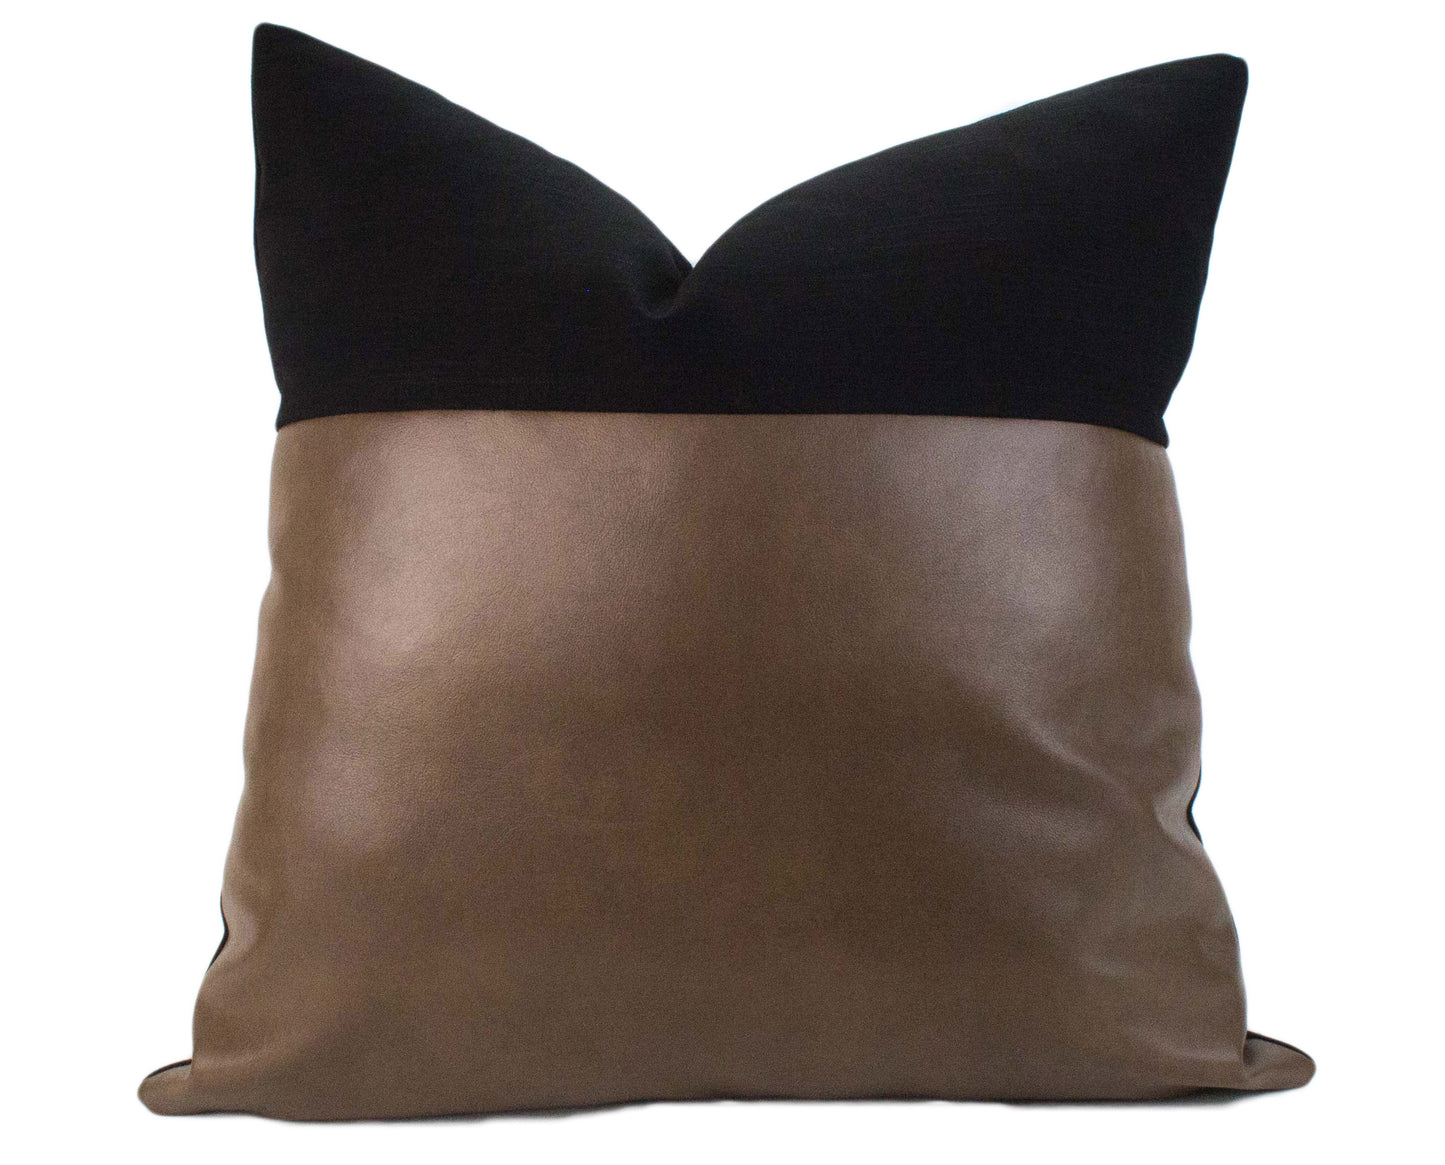 Black Linen & Caramel Vegan Leather Pillow Cover, 20x20"